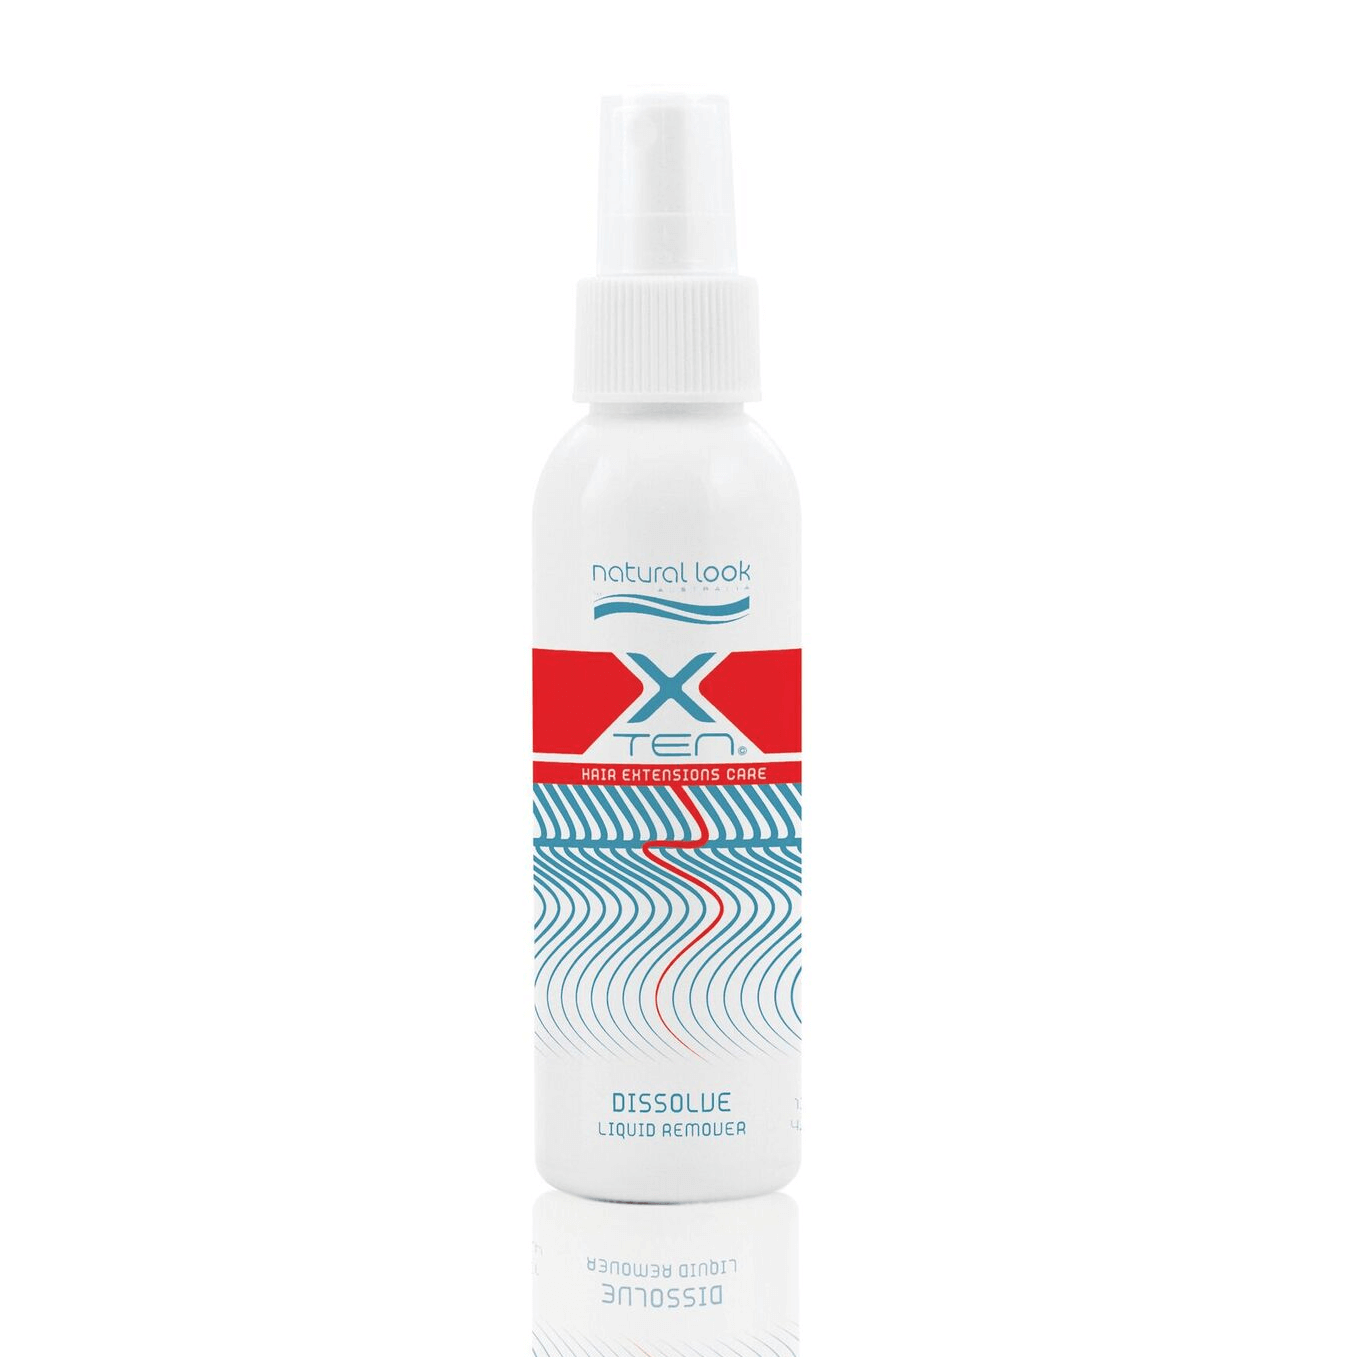 X-TEN Dissolve Tape Hair Extension Remover Spray 125ml | Sophia Hair Australia